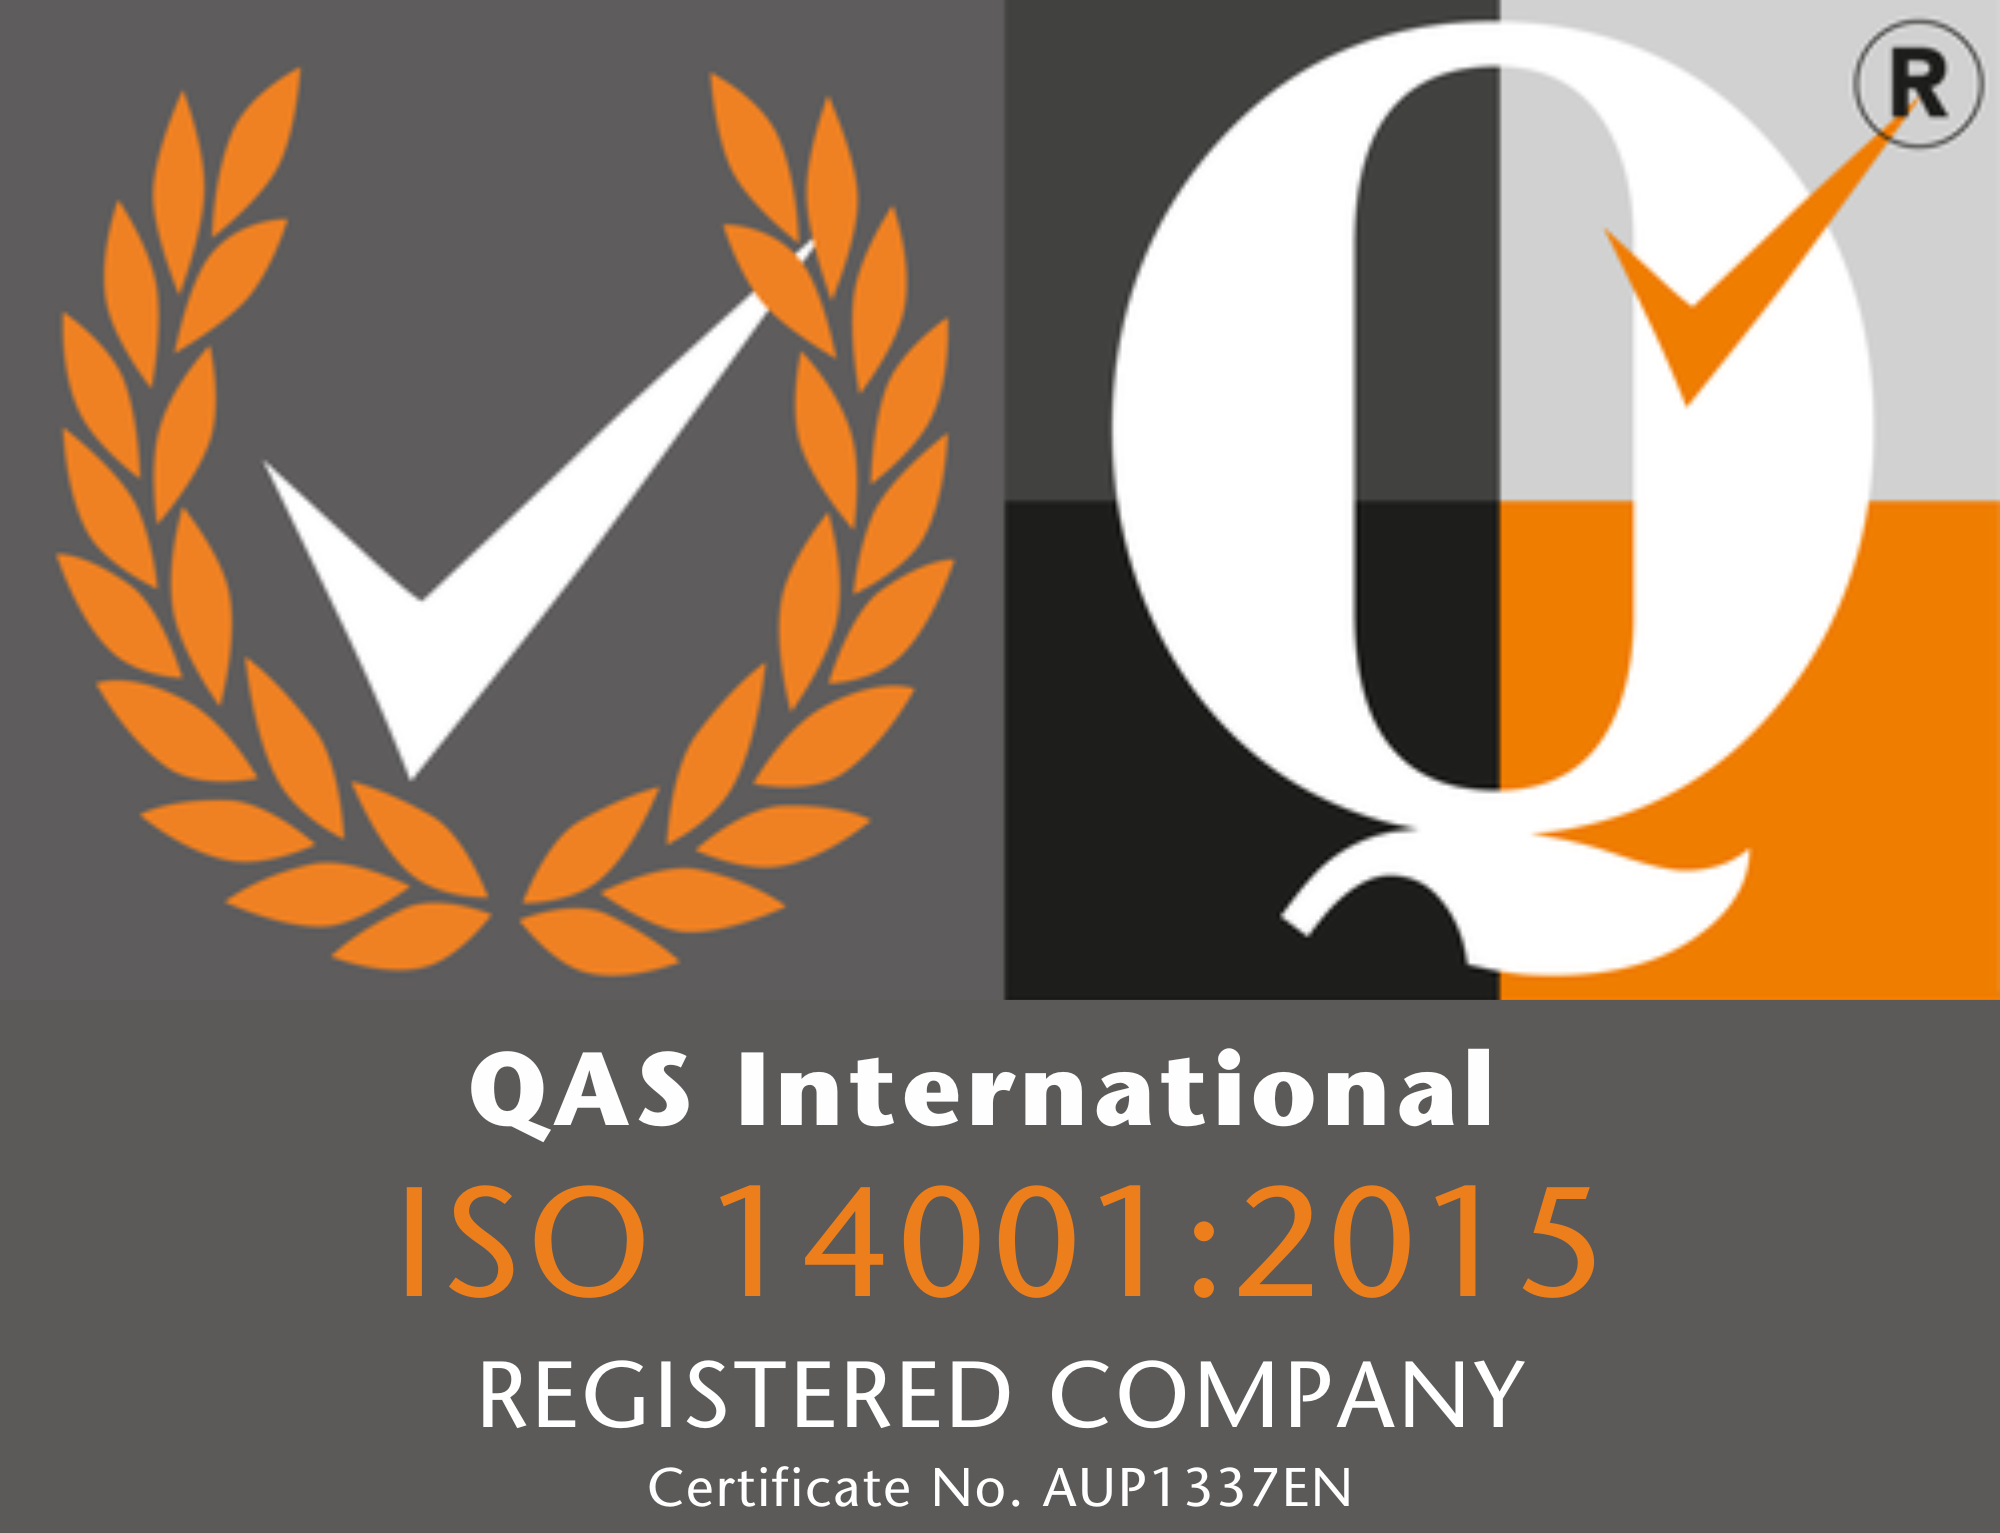 ISO 14001 – Environmental